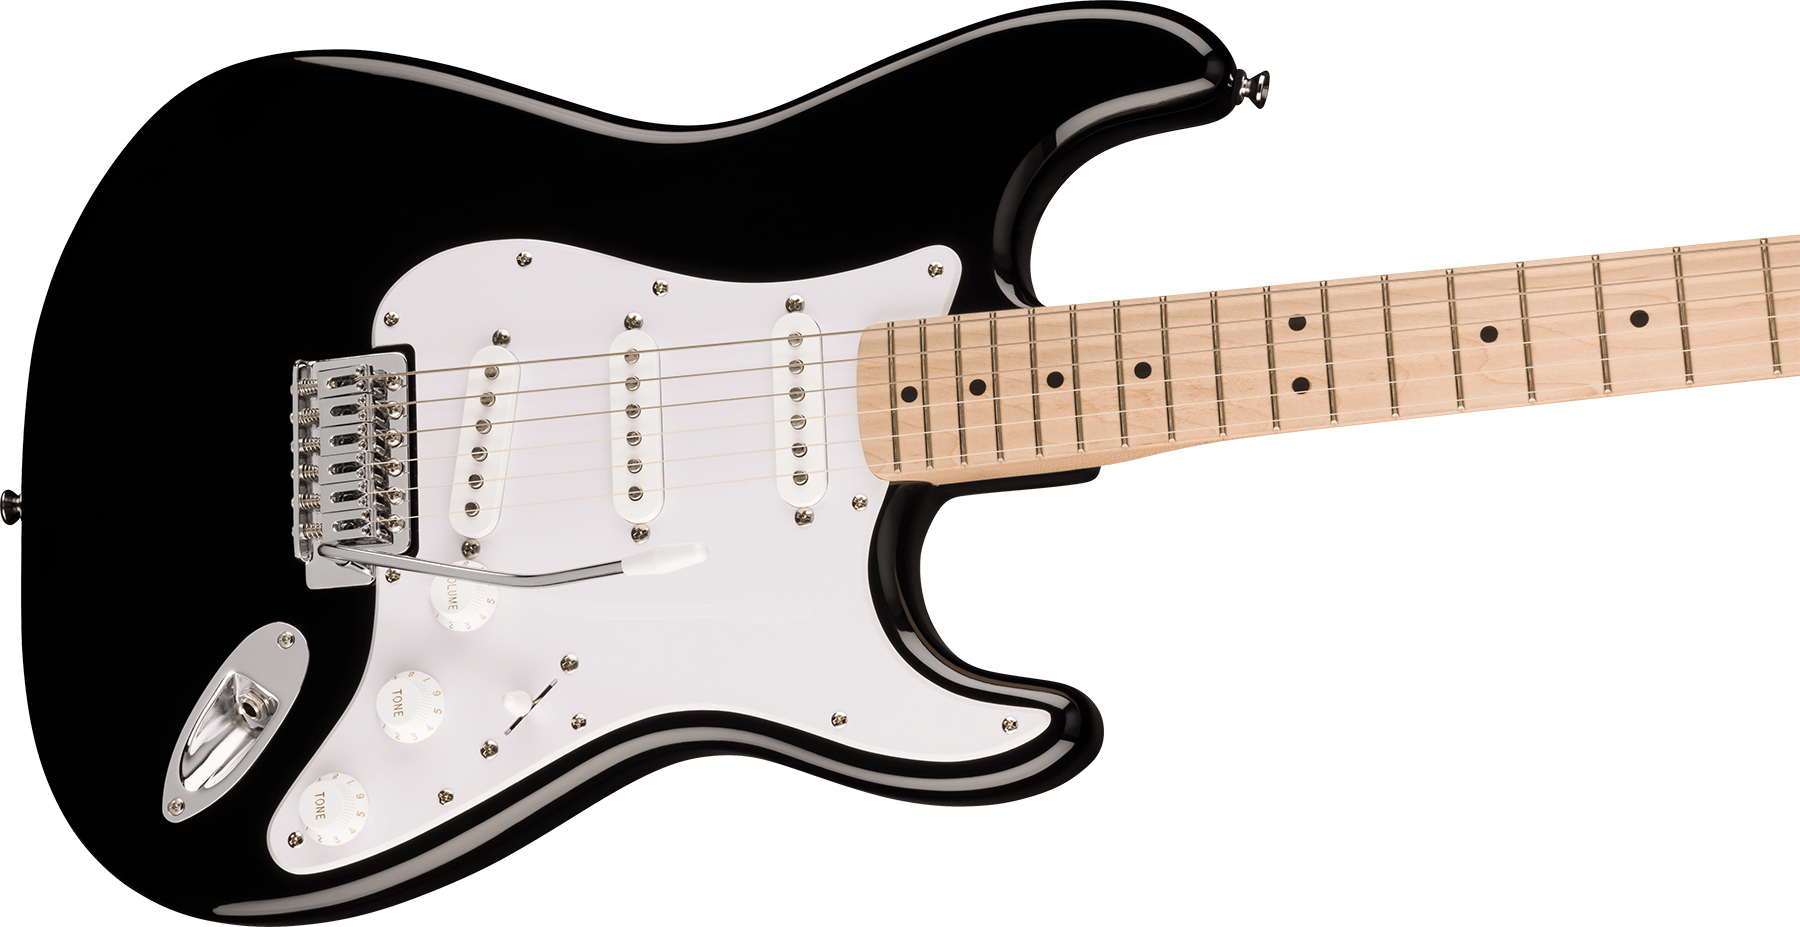 Squier Strat Sonic Lh Gaucher 3s Trem Mn - Black - Left-handed electric guitar - Variation 2